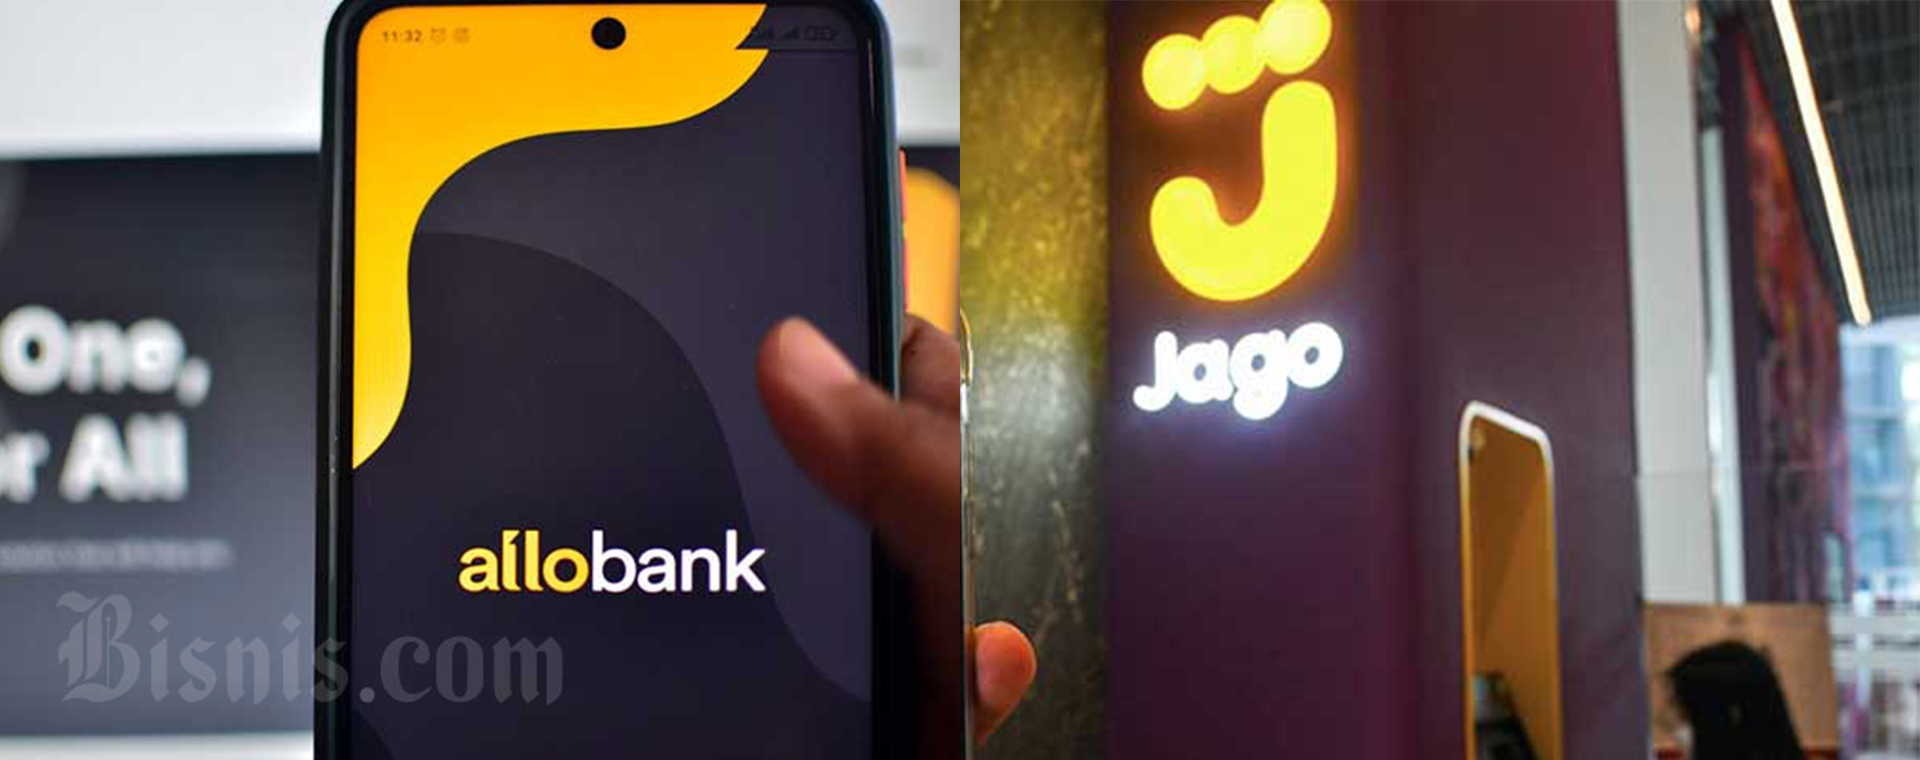 Logo Allo Bank dan Bank Jago.  - Bisnis/Fanny Kusumawardhani &amp; Abdurachman